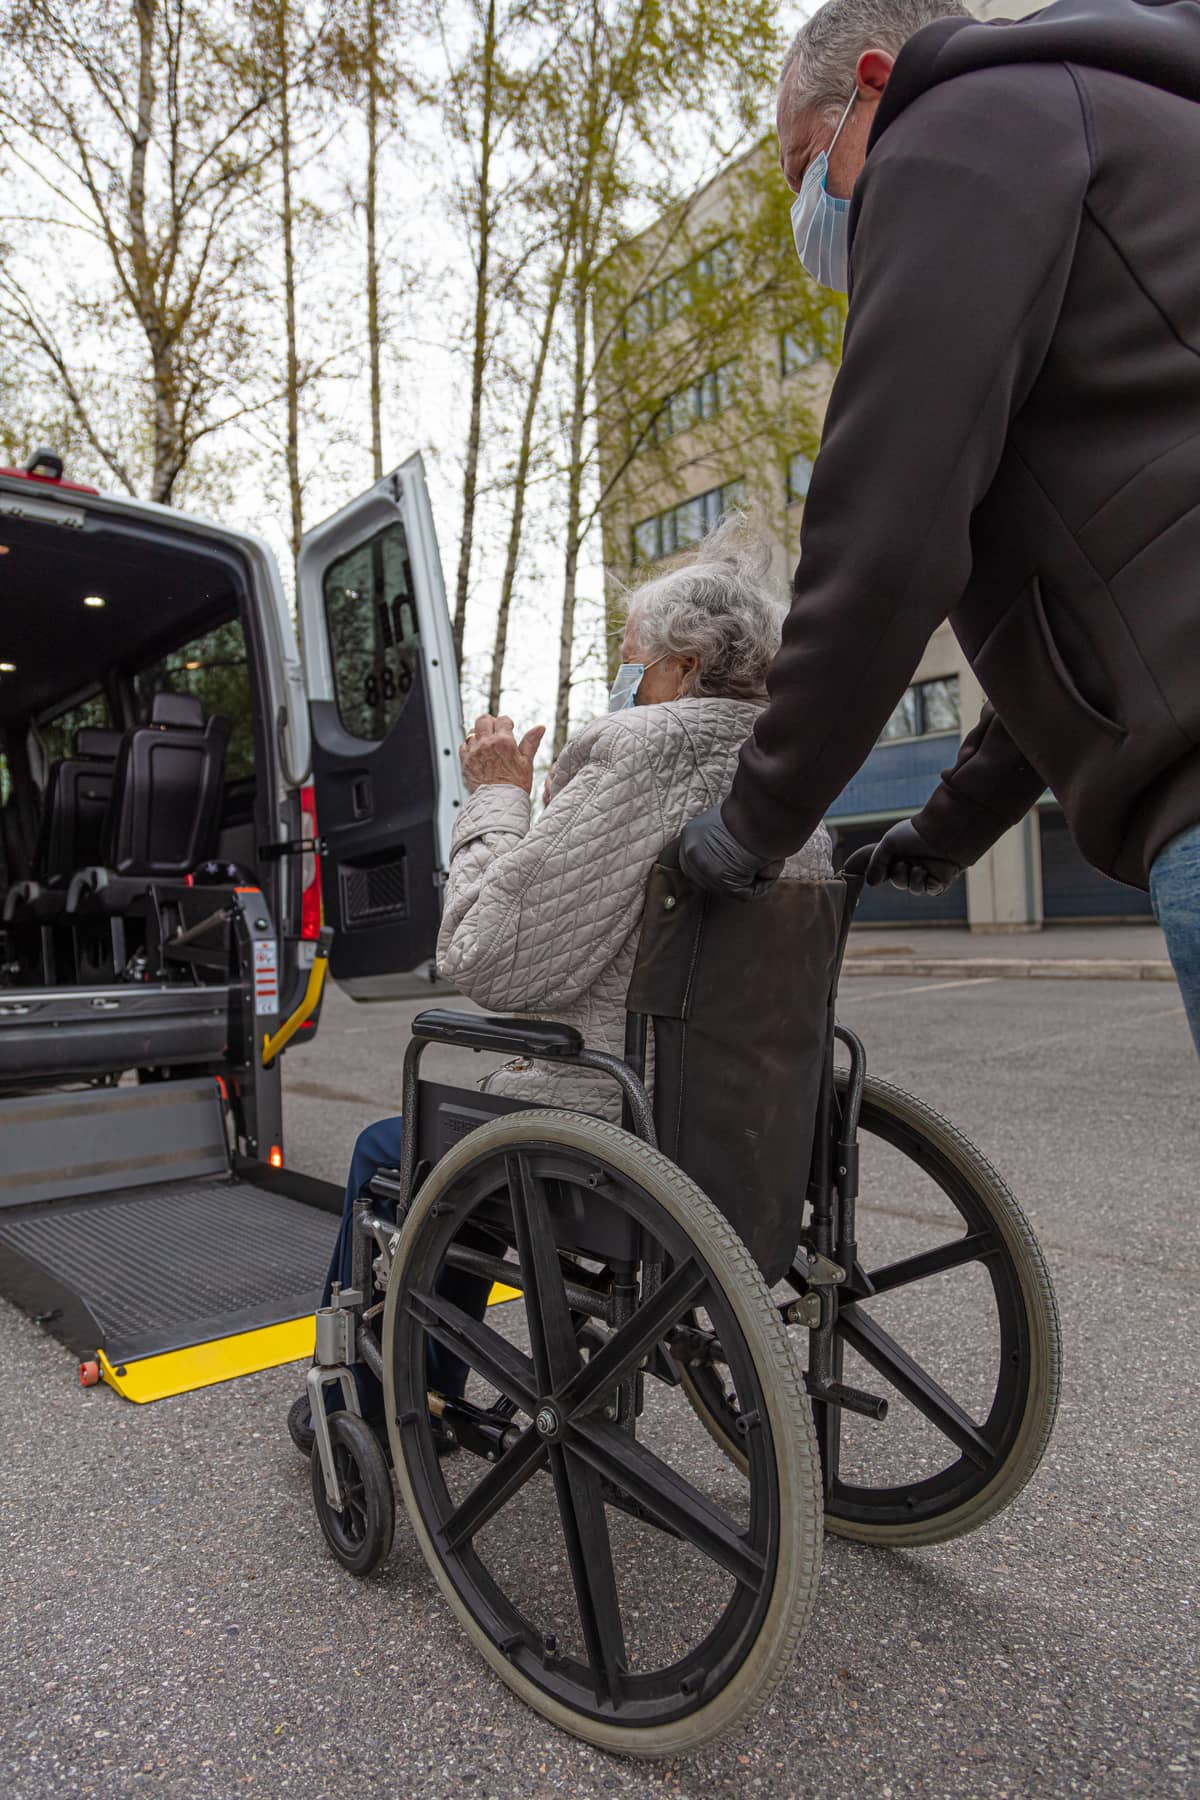 A man using a wheelchair lift to get a woman in a wheelchair into a van